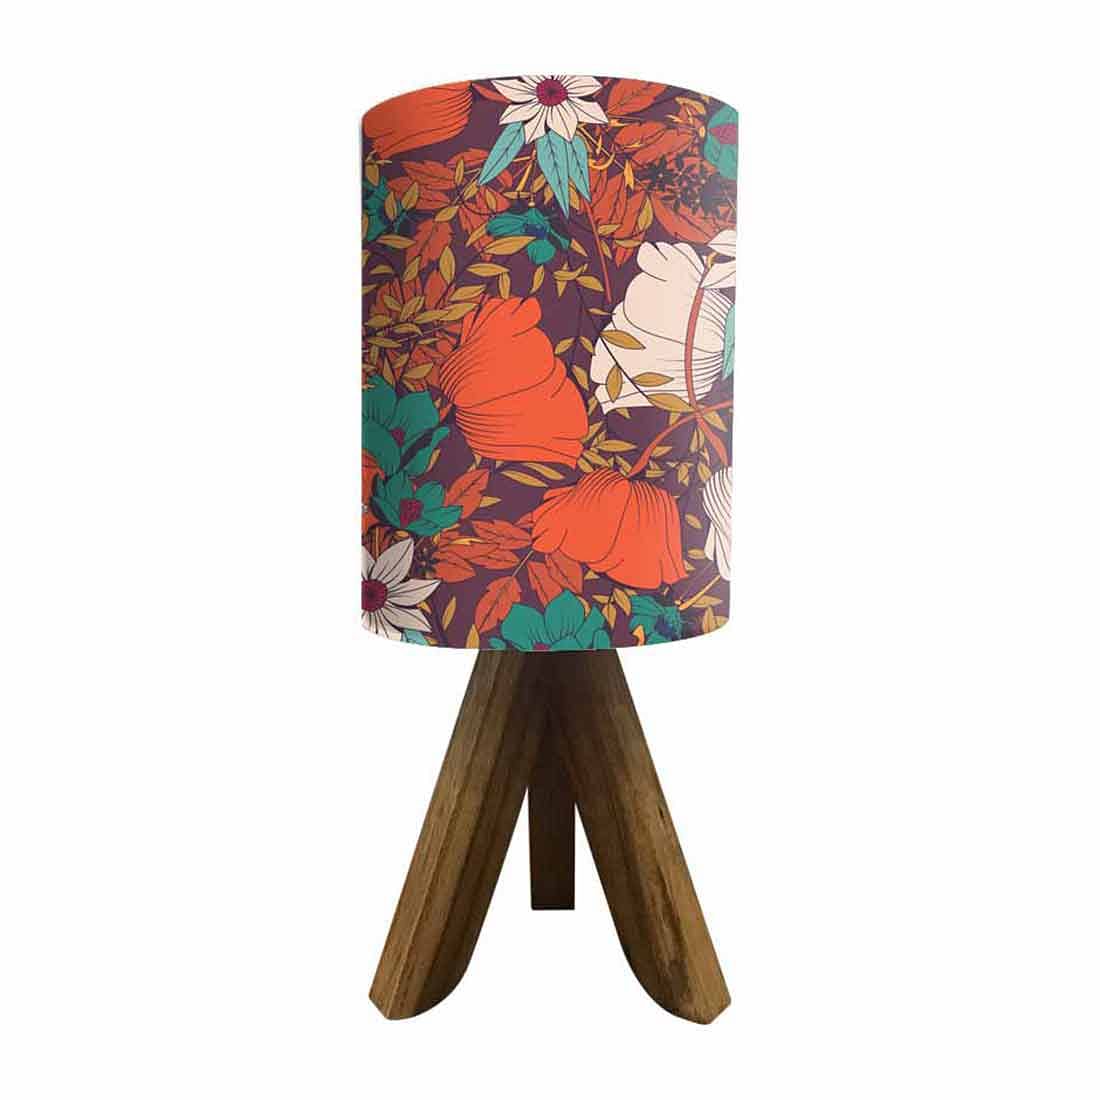 Mini Wooden Lamp Table For Bedroom Living Room-Elegance Orange Nutcase